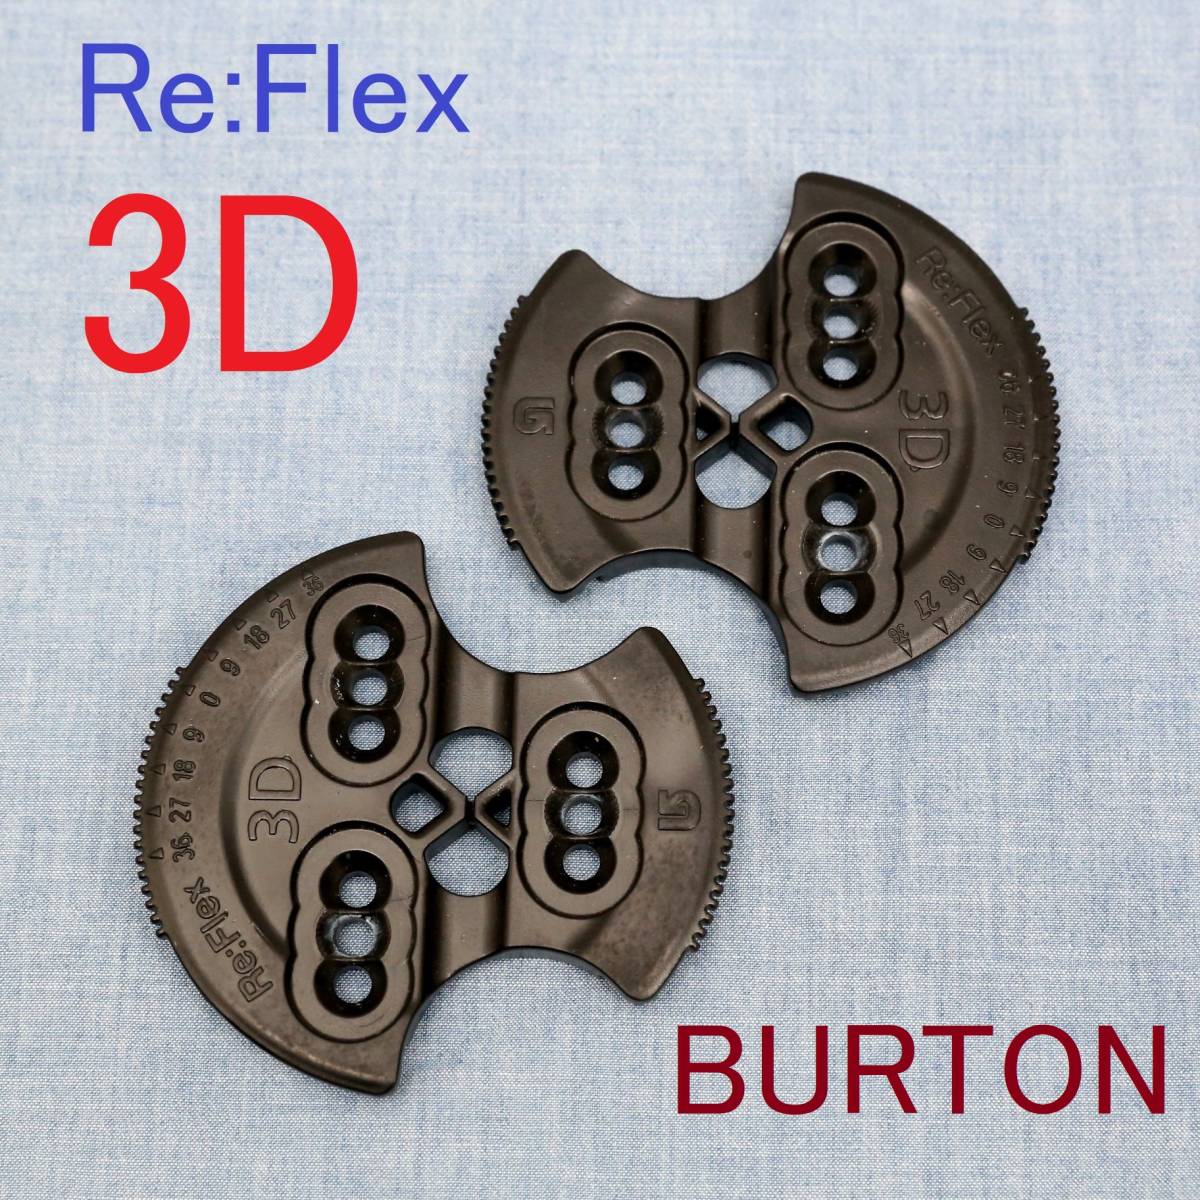 【3D ディスク】Re:Flex BURTON バートン 3穴 ビンディング バインディング GENESIS CUSTOM LEXA MALAVITA MISSION ESCAPADE CARTEL等に_画像1